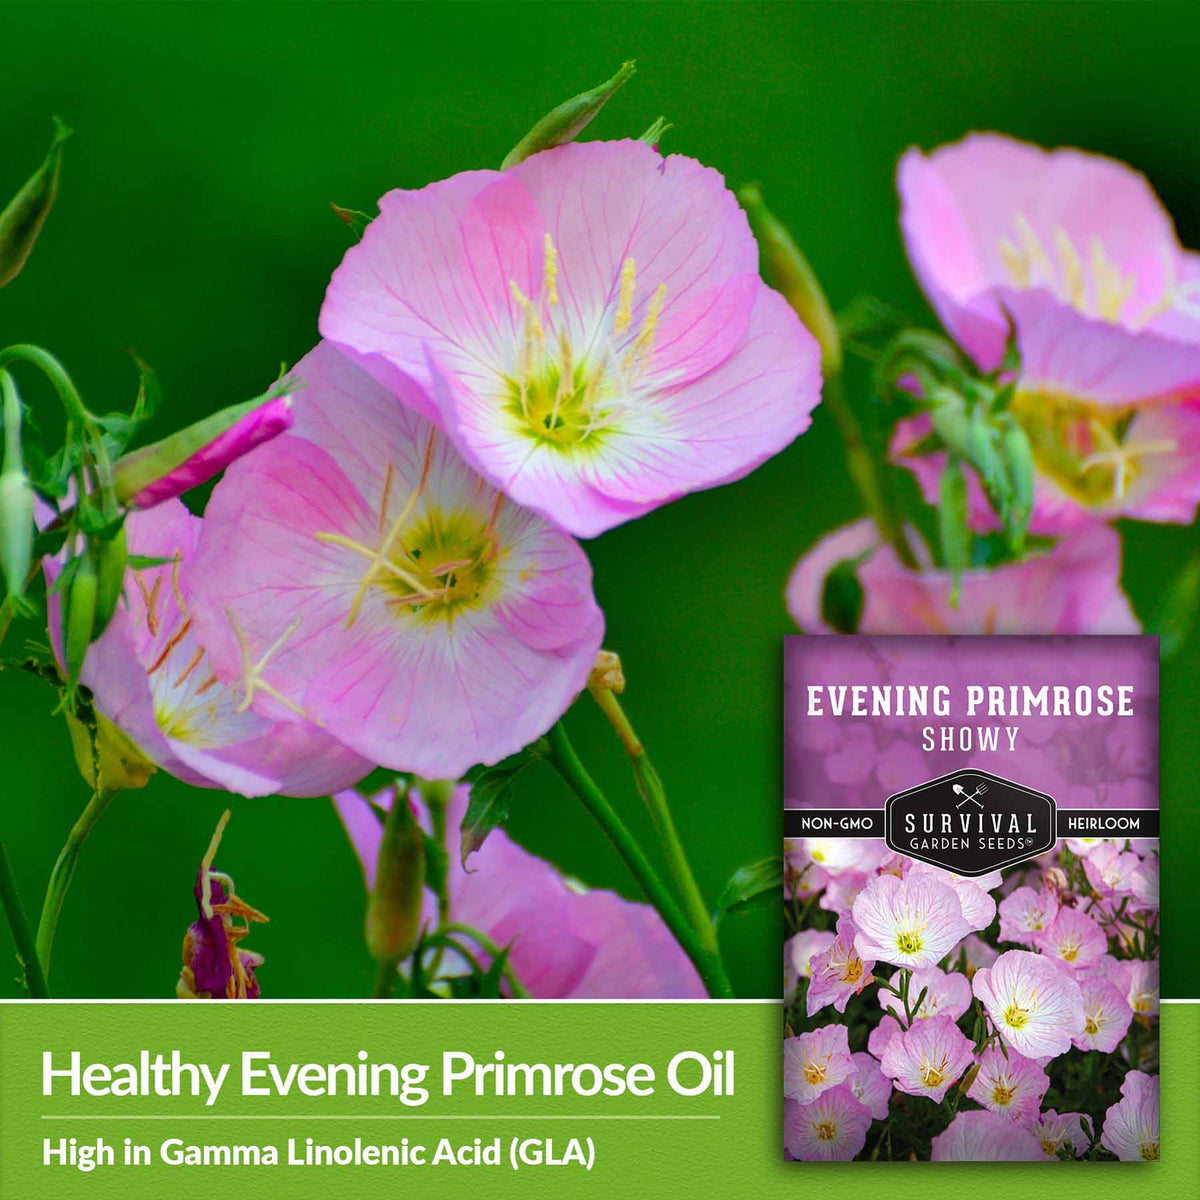 Healthy evening primrose oil - High in gamma linolenic acid (GLA)